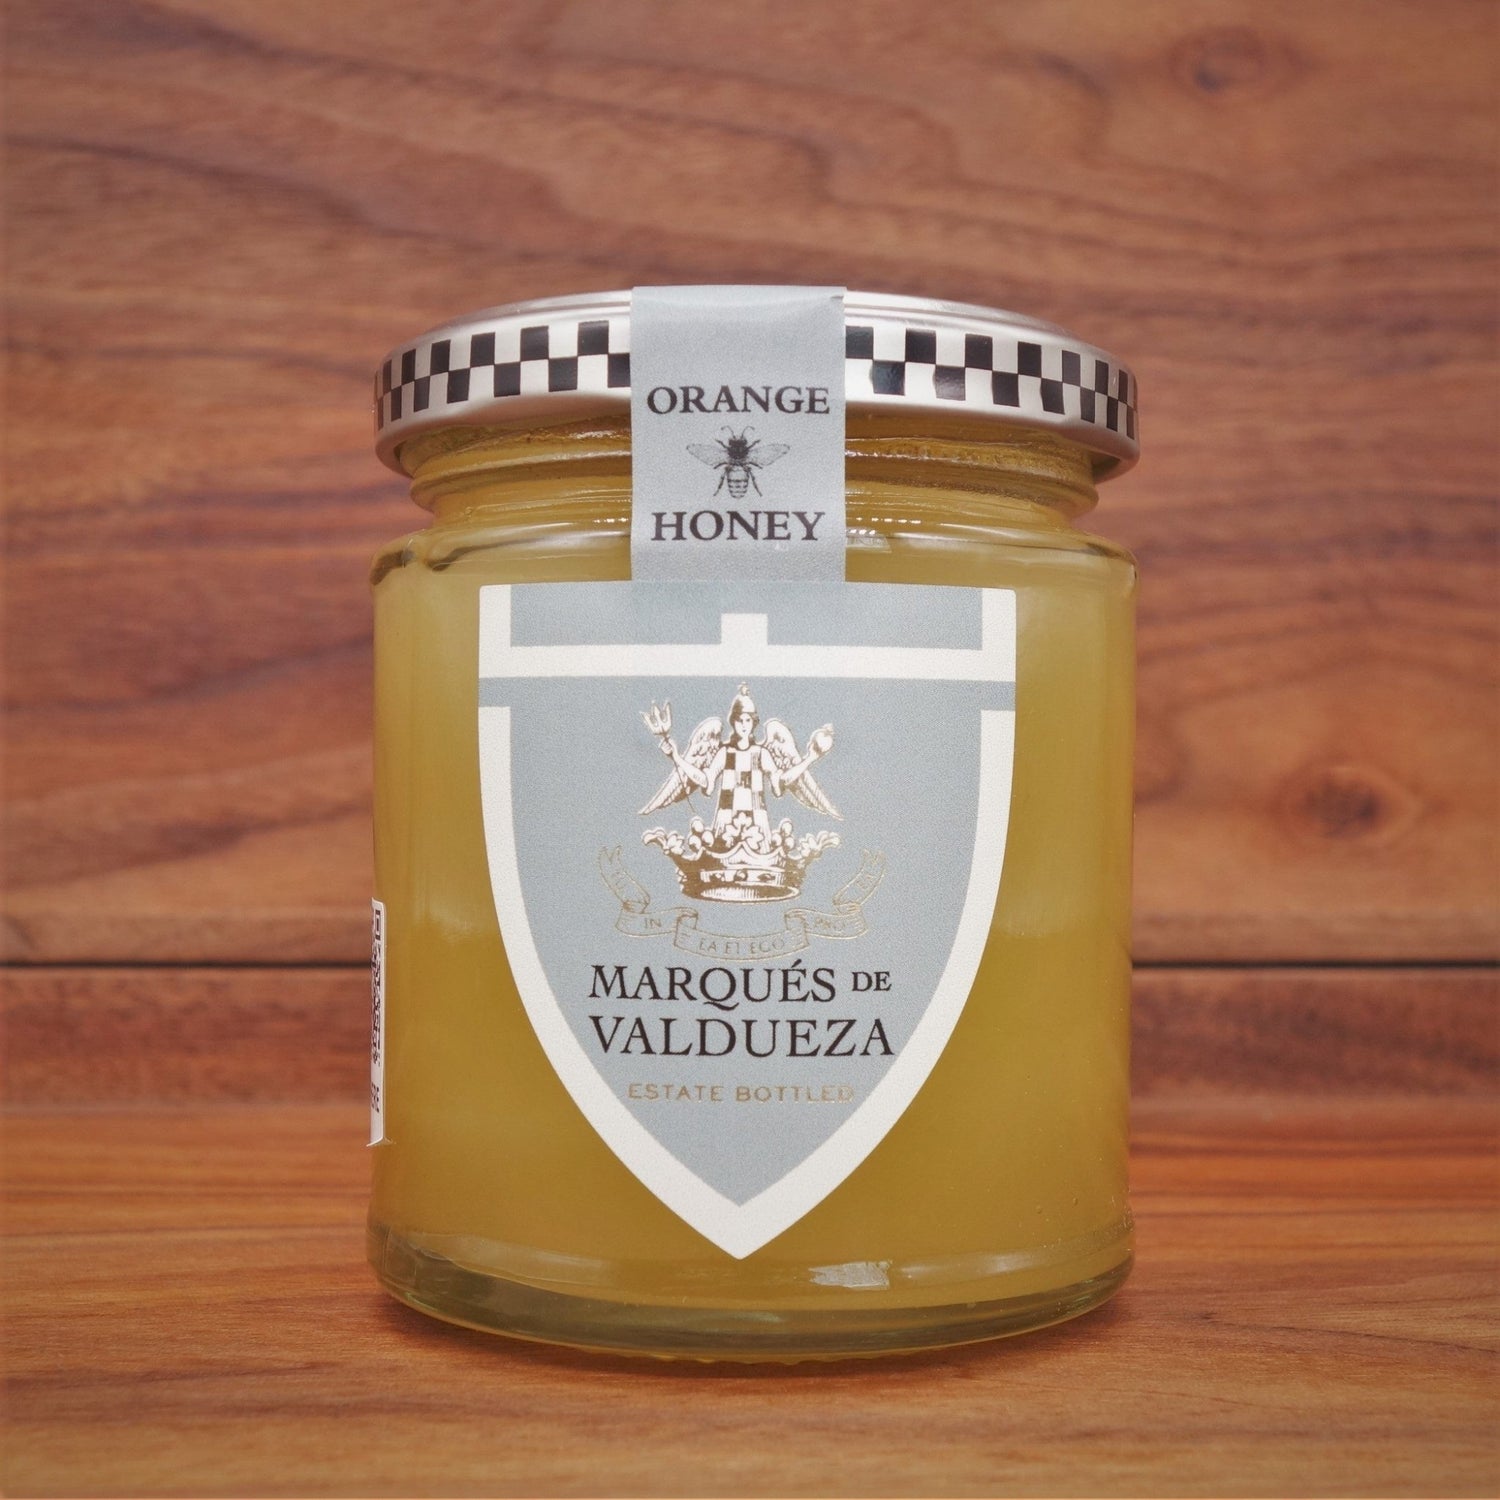 Marques de Valdueza - Orange Blossom Honey - Mongers' Provisions